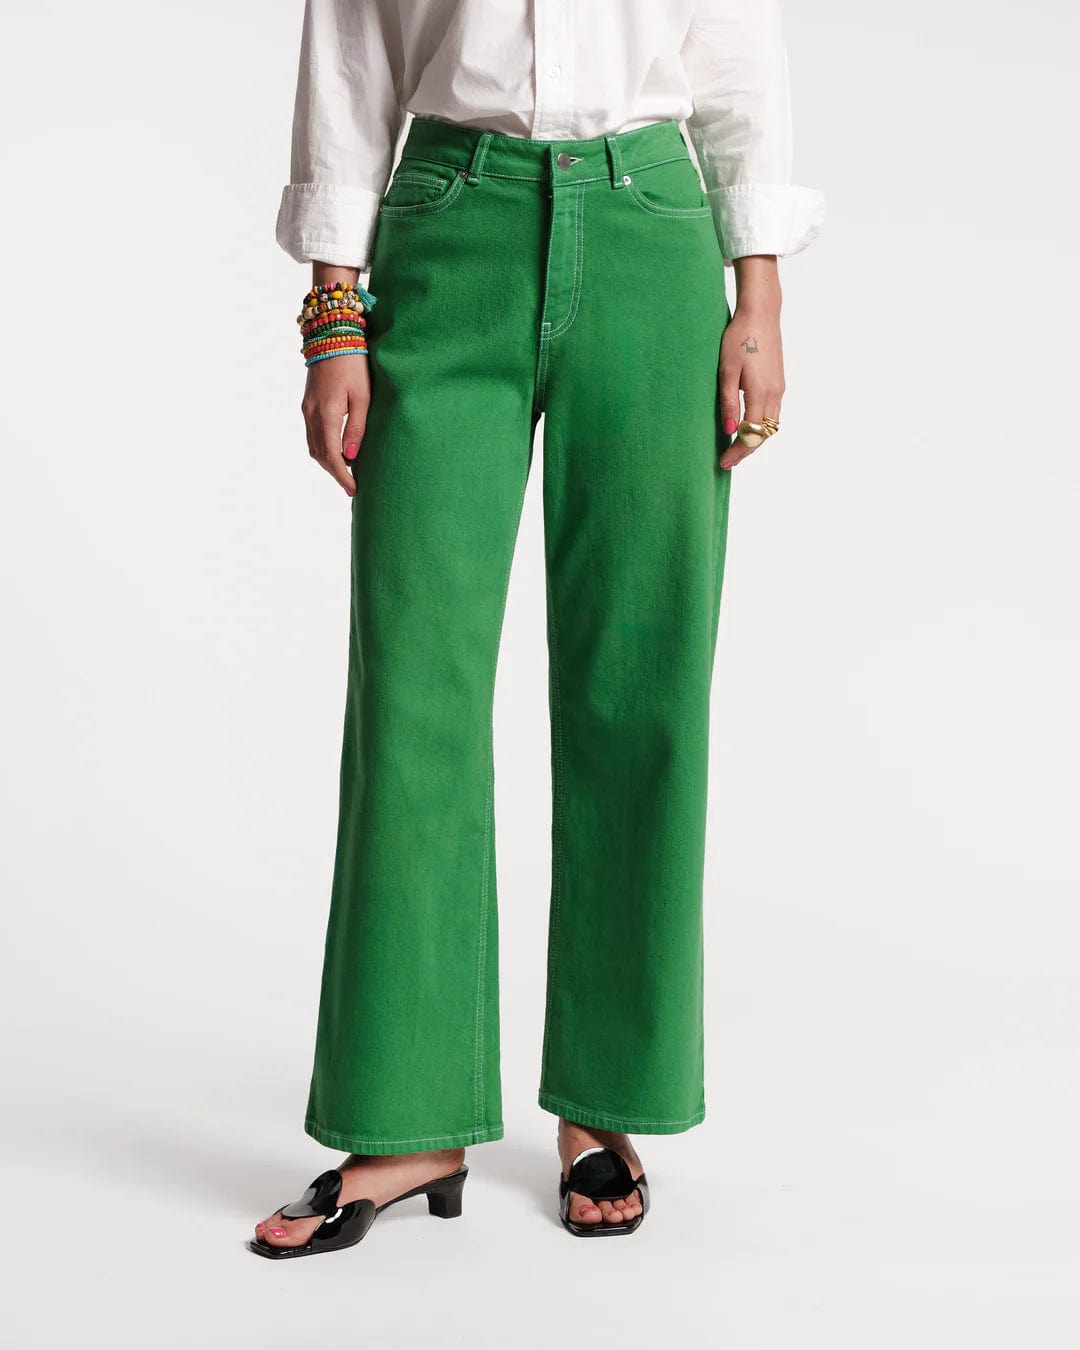 Marni Floral-Print Stirrup Pants women - Glamood Outlet